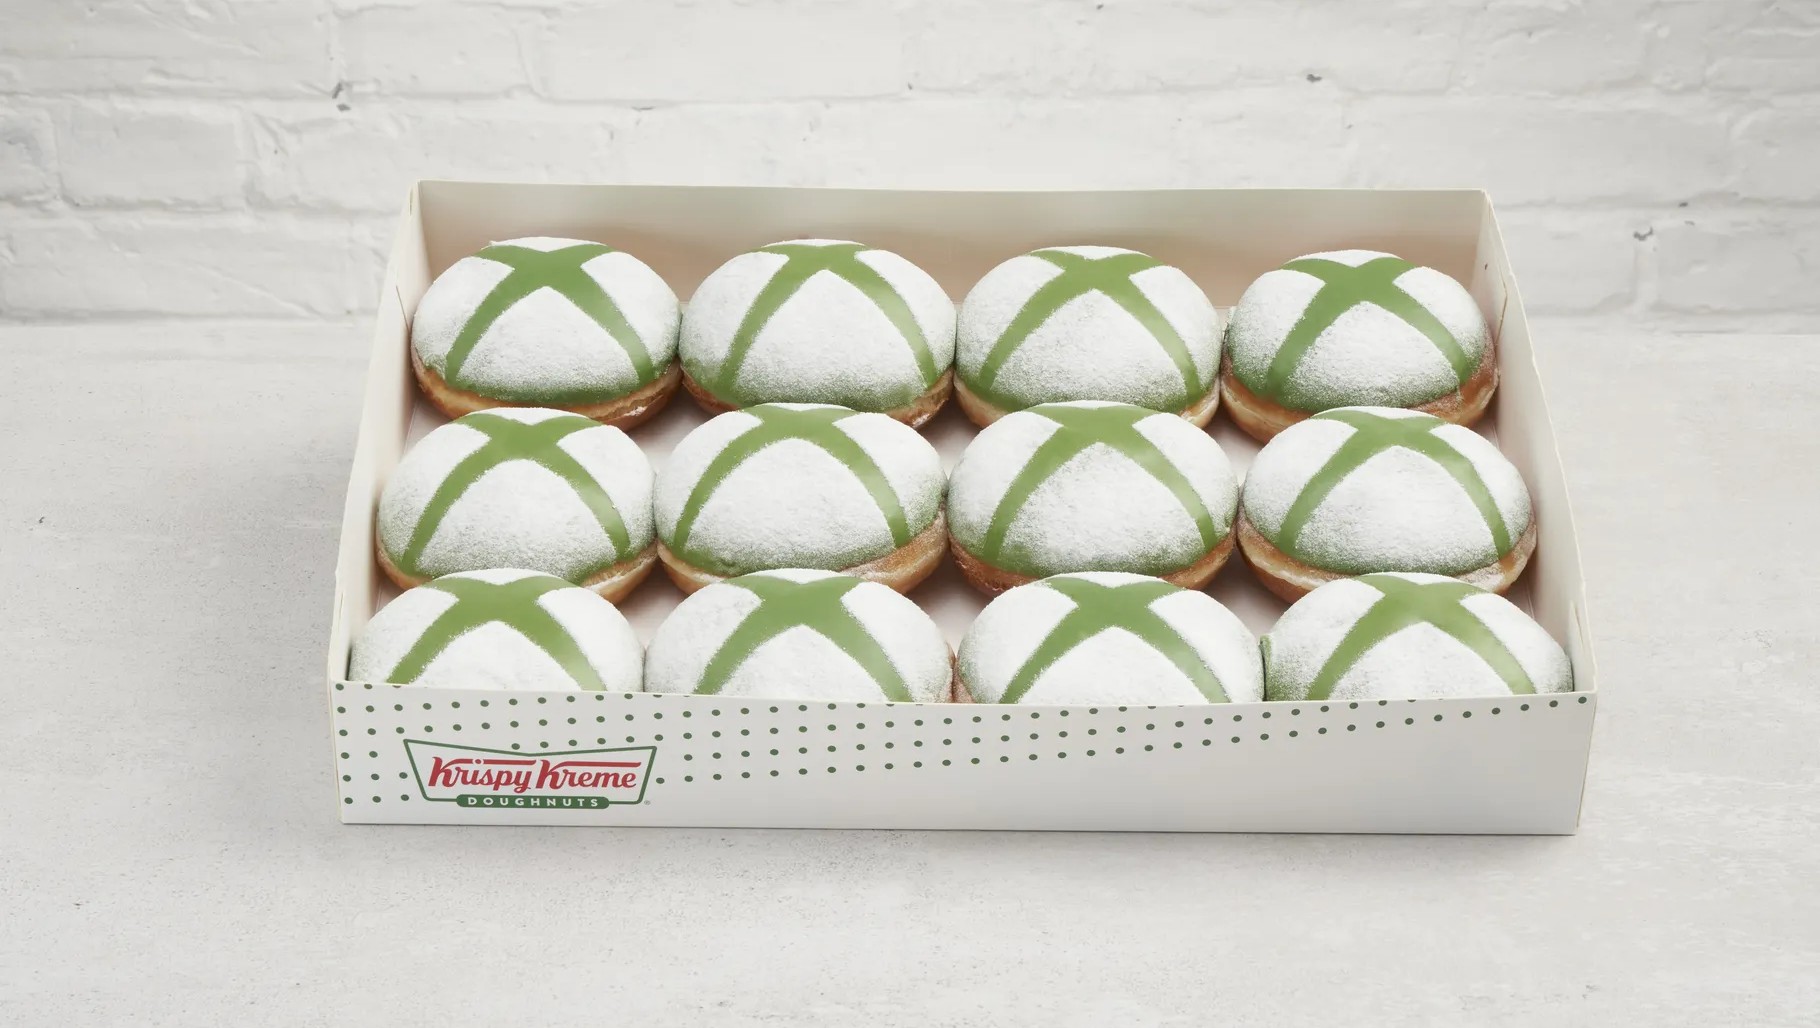 Microsoft и Krispy Kreme представили ограниченную партию пончиков с логотипом Xbox